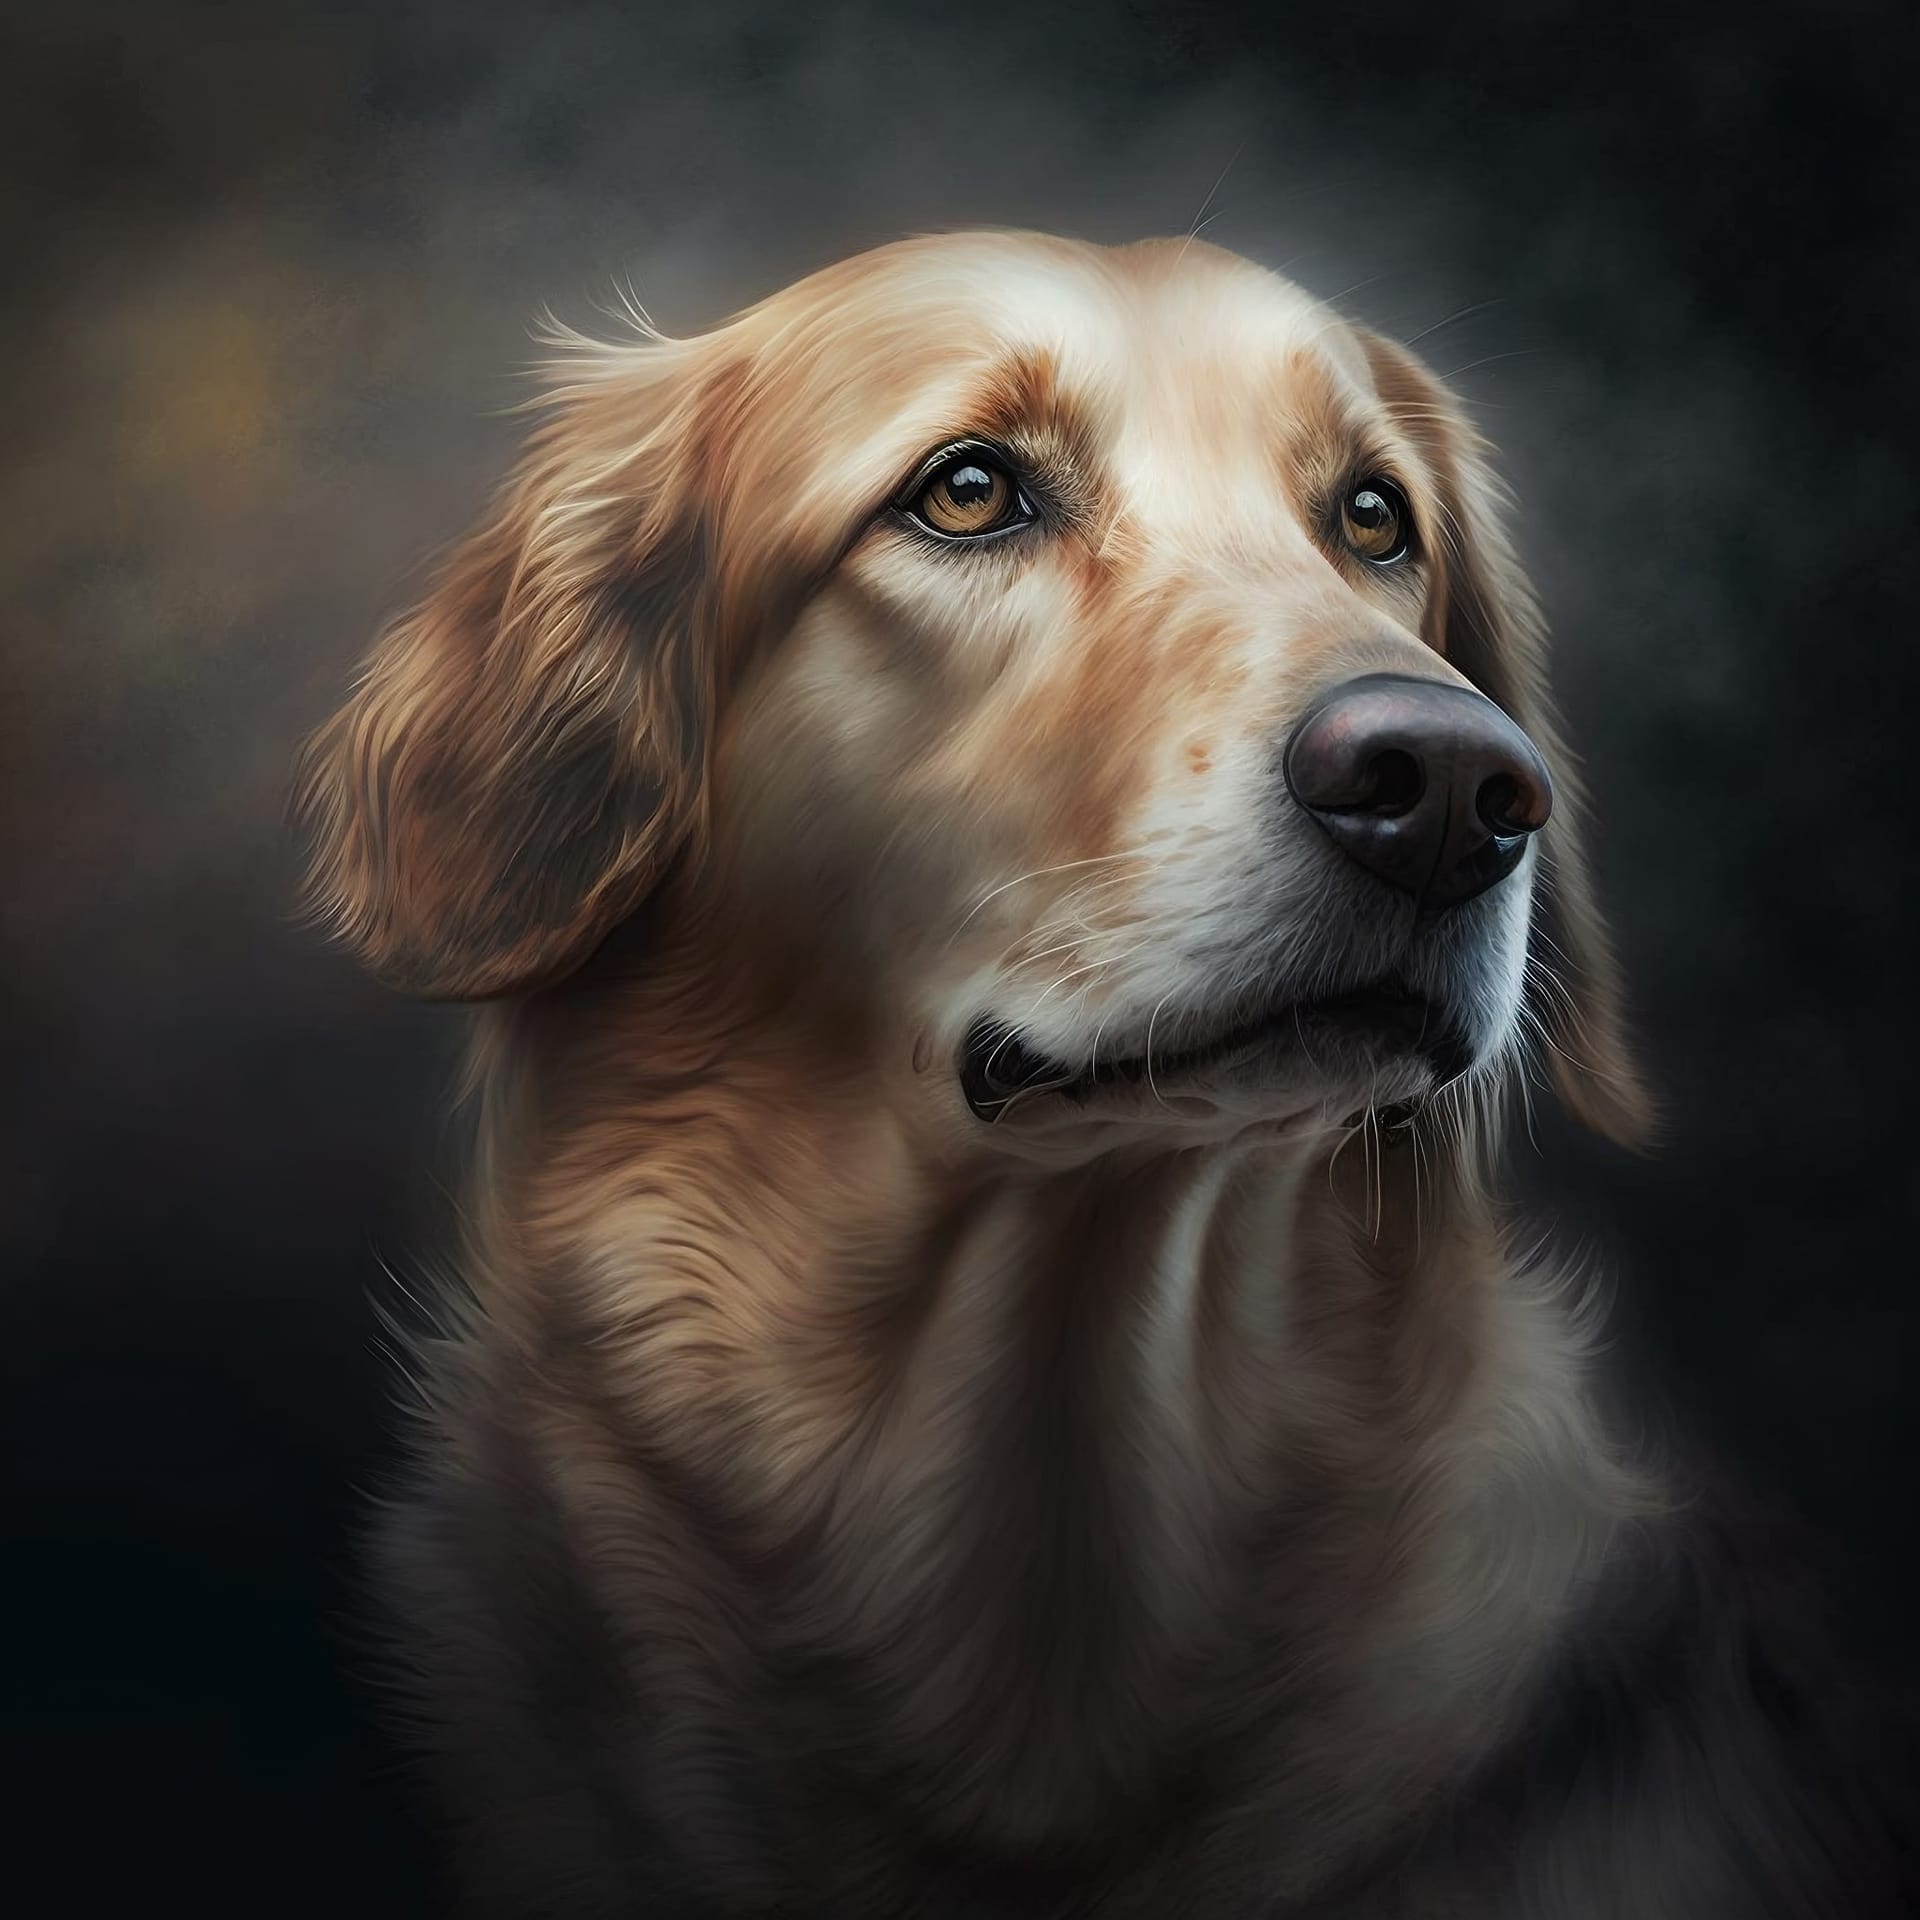 Dog portrait creative digital painting dog images